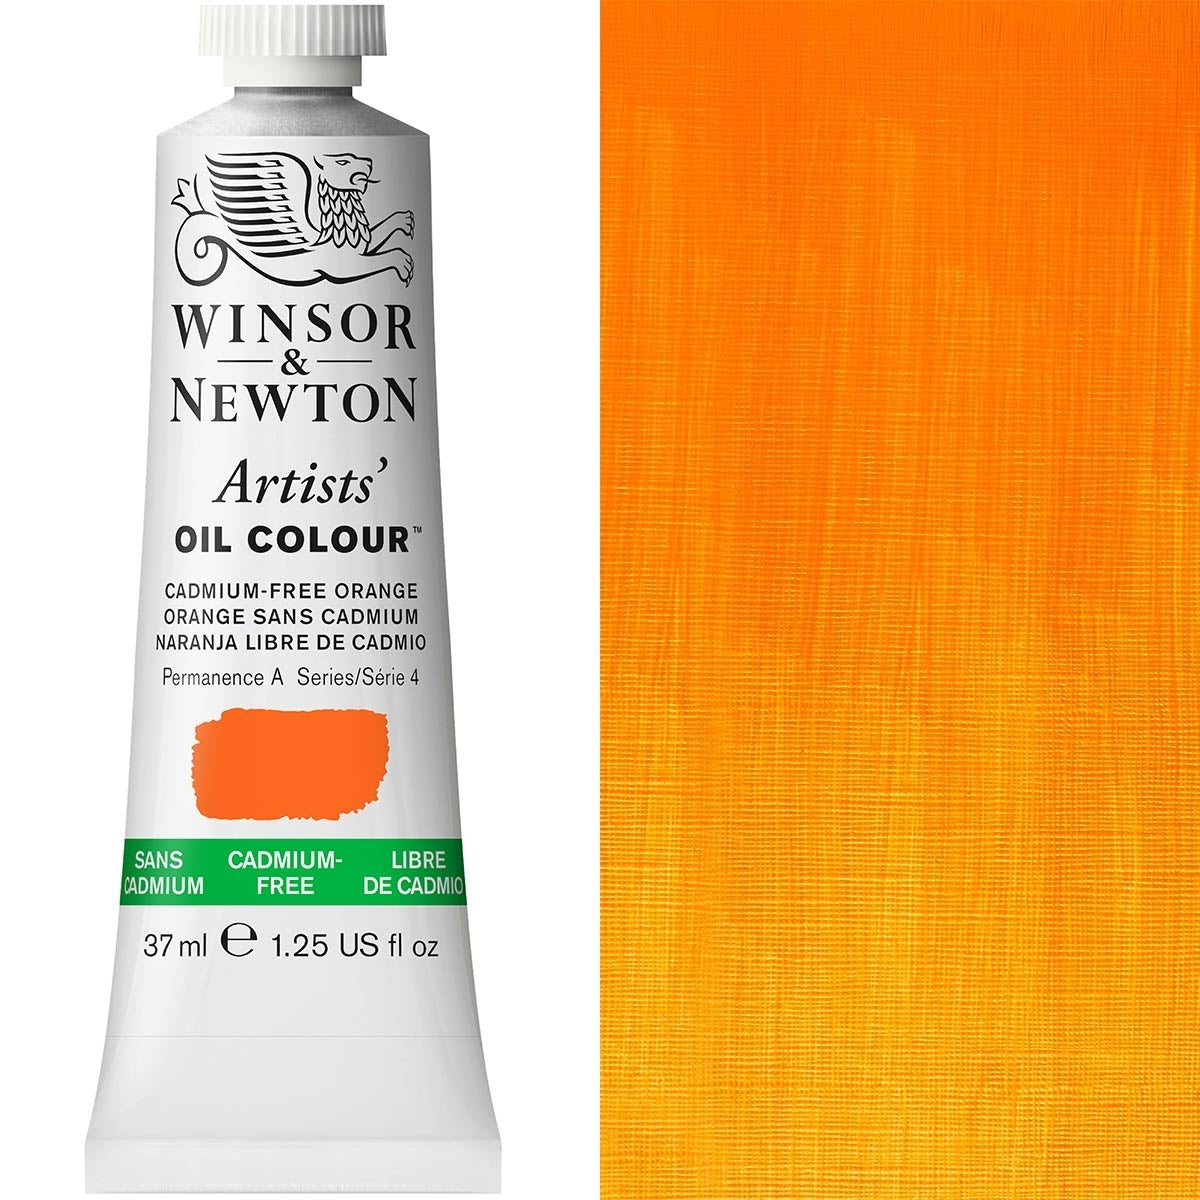 Winsor and Newton - Artists' Oil Colour - 37ml - Cad Free Orange